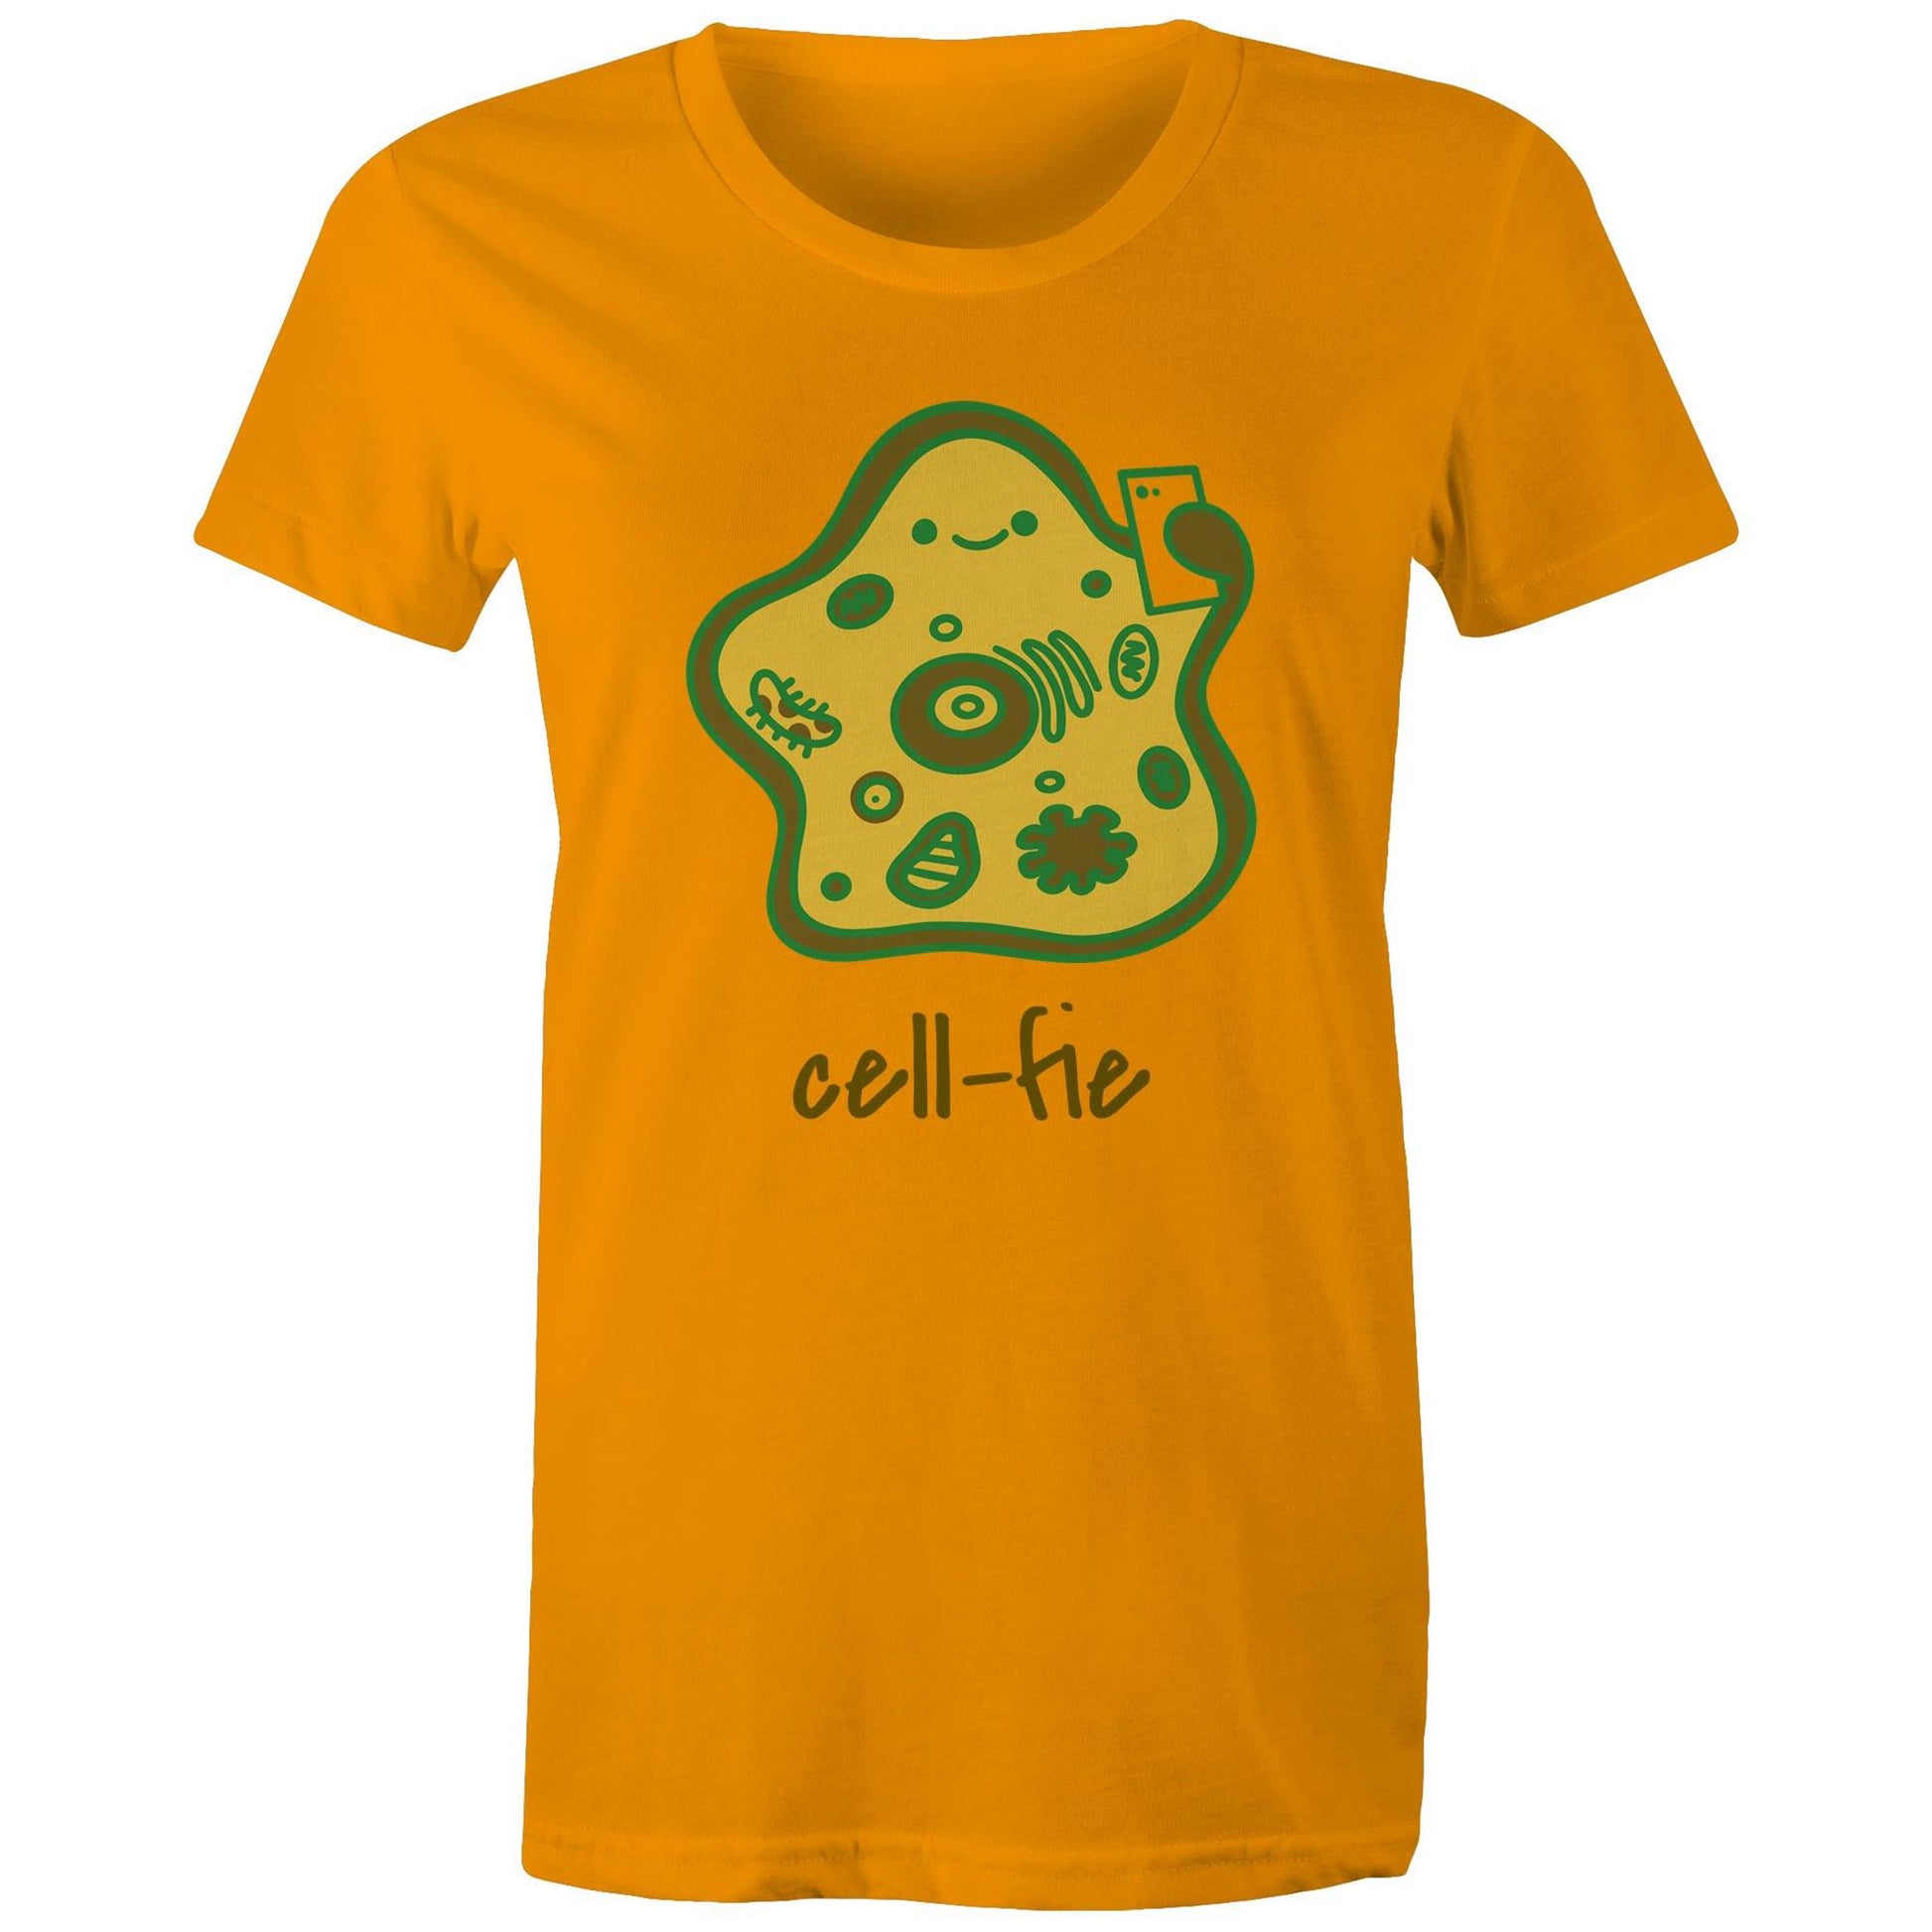 Cell-fie - Womens T-shirt Orange Womens T-shirt Science